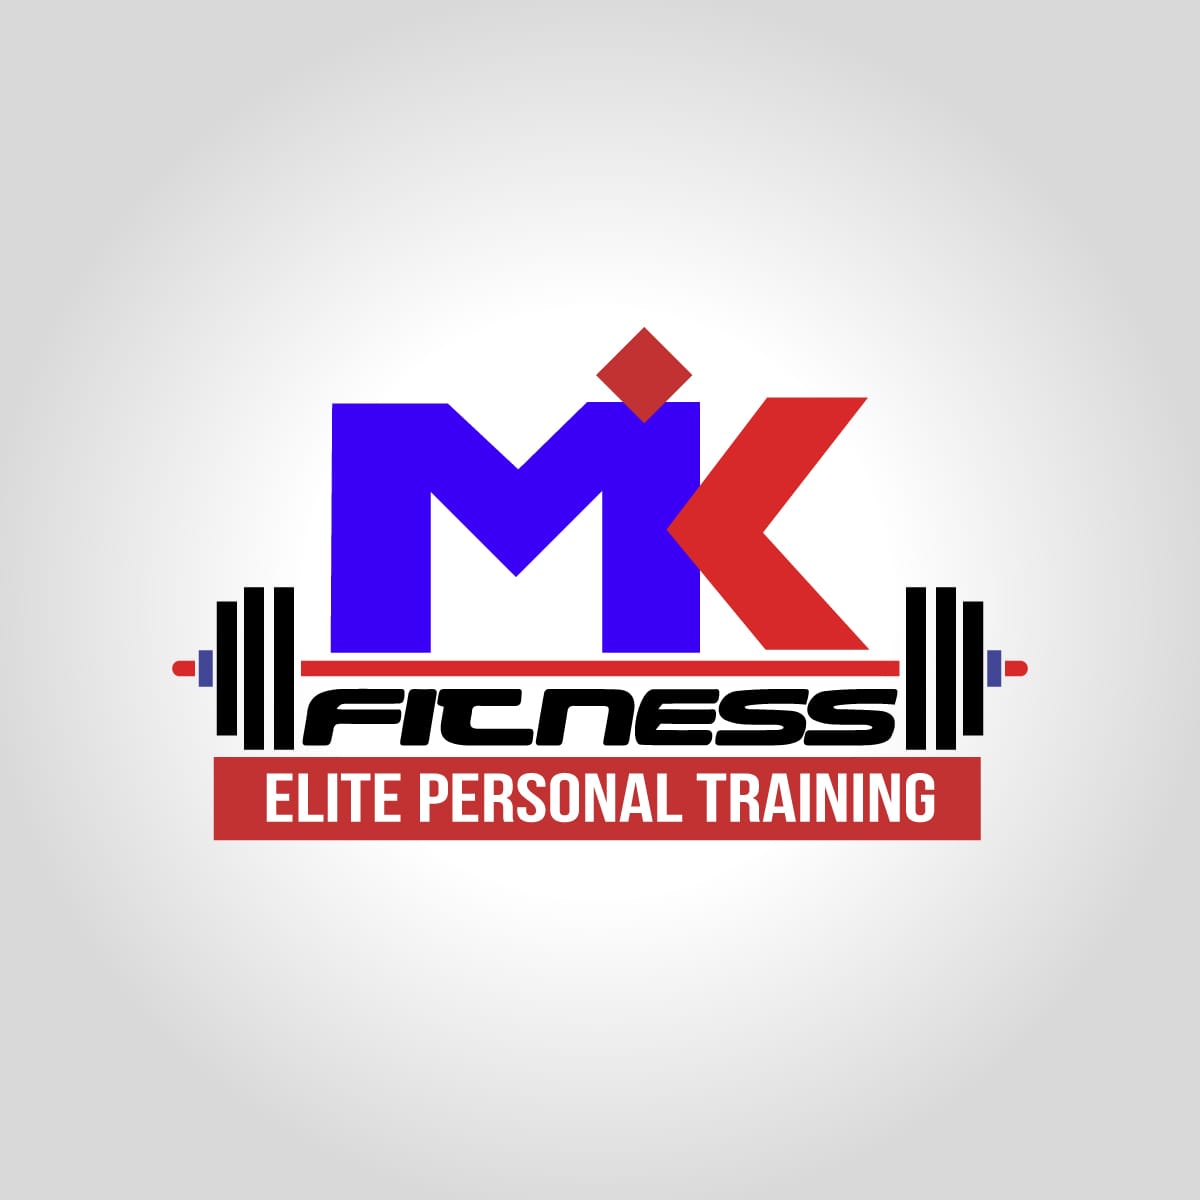 Mik Fitness Elite Personal Training